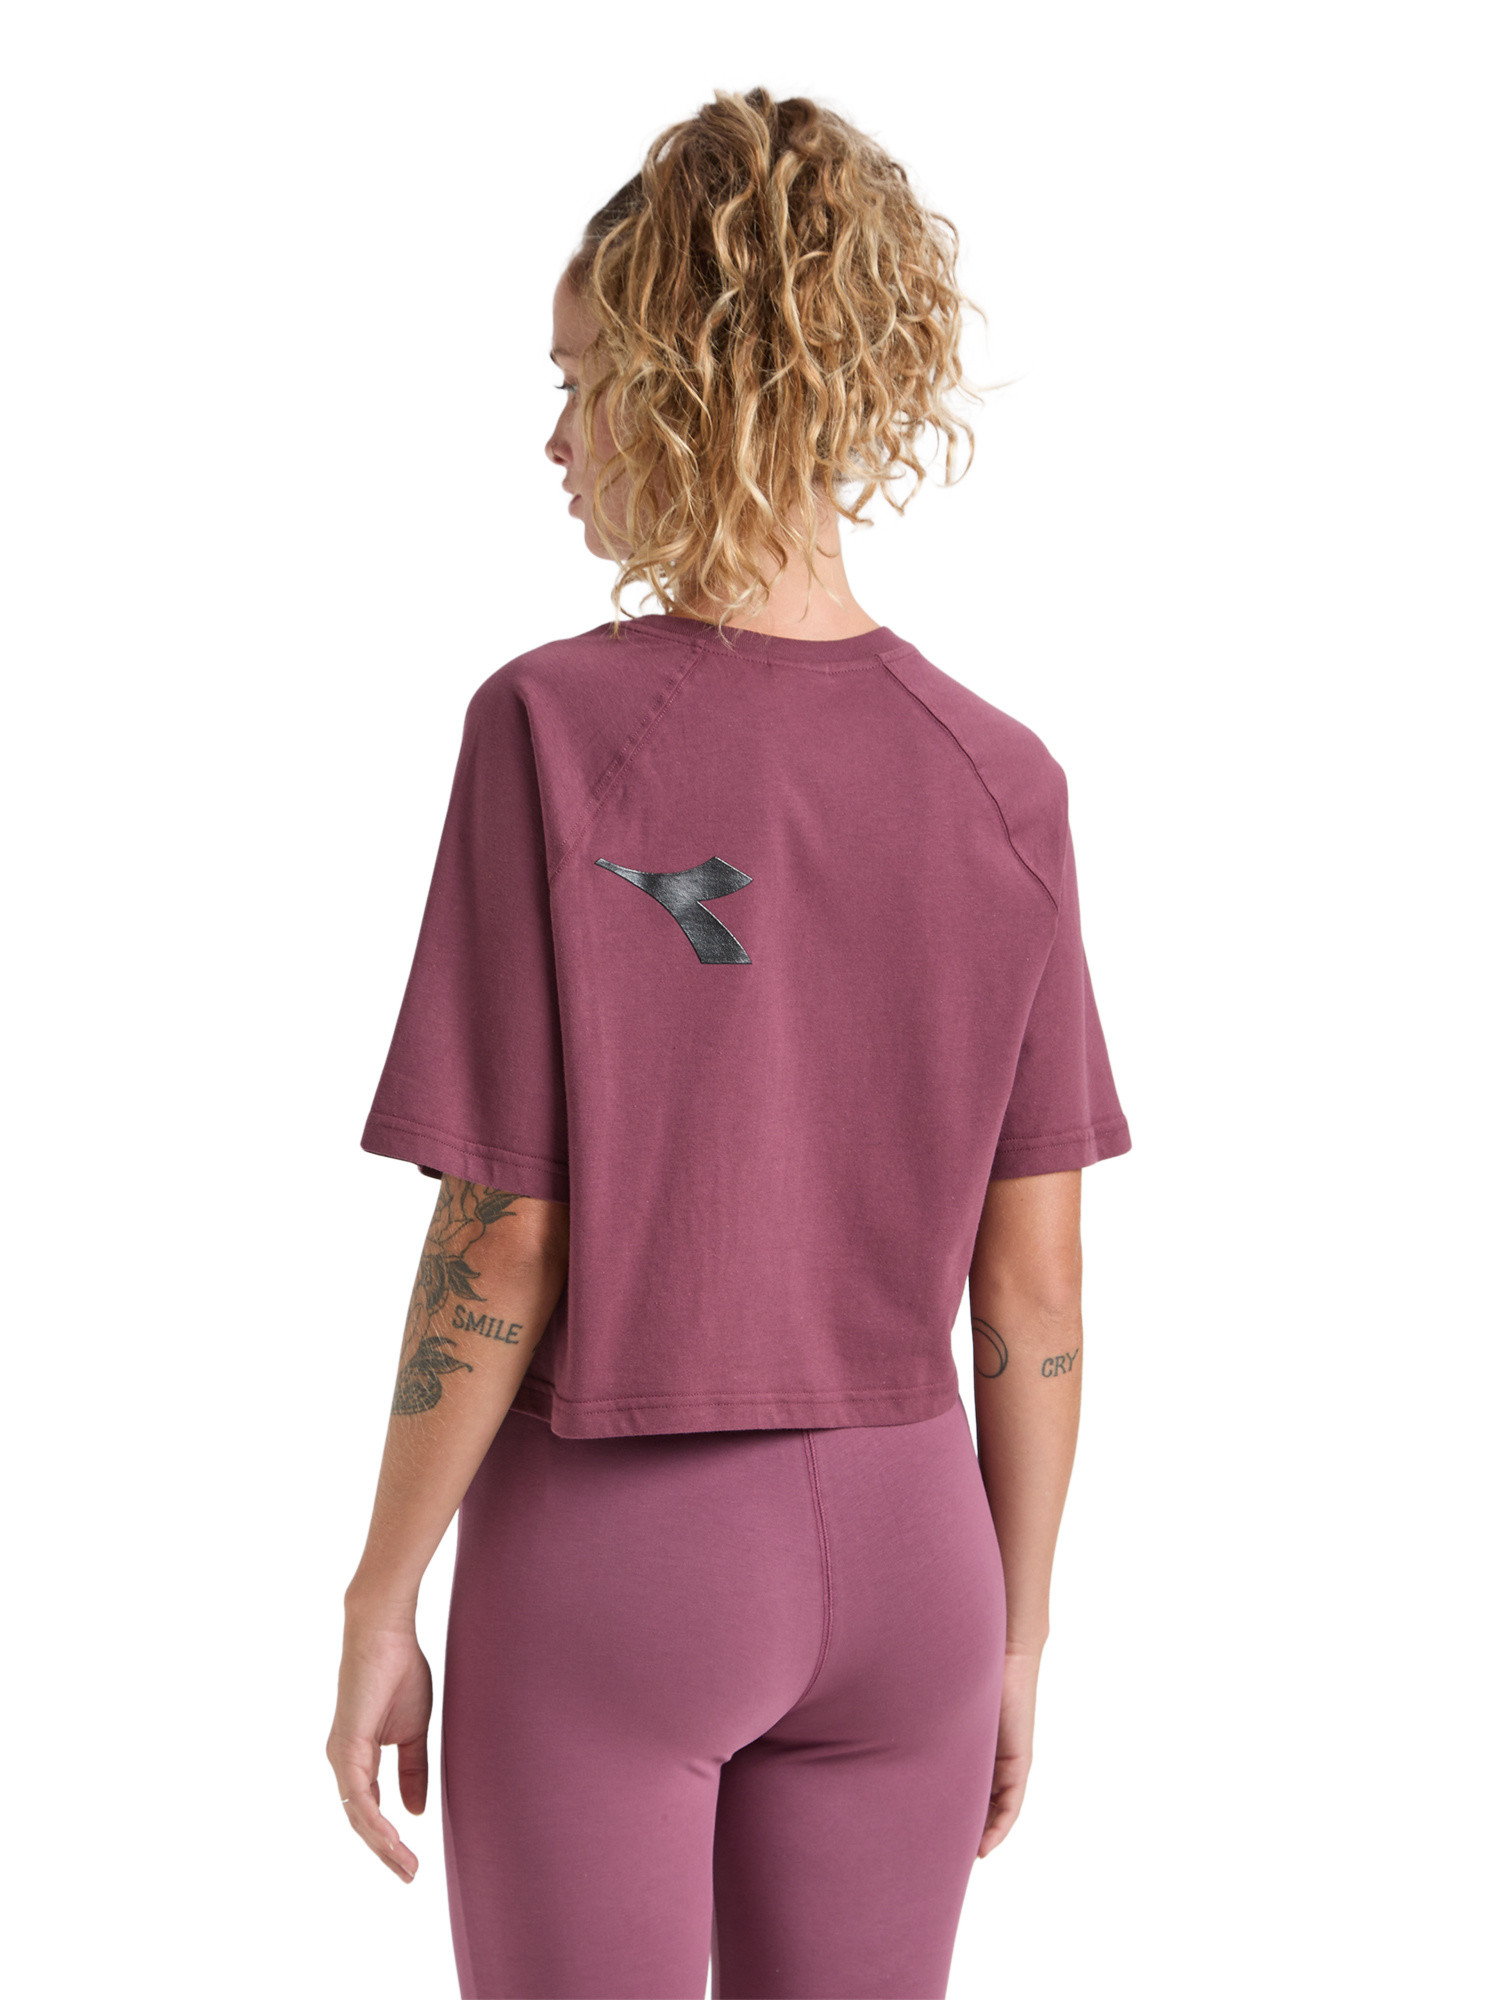 Diadora - Manifesto cotton T-shirt, Purple, large image number 3